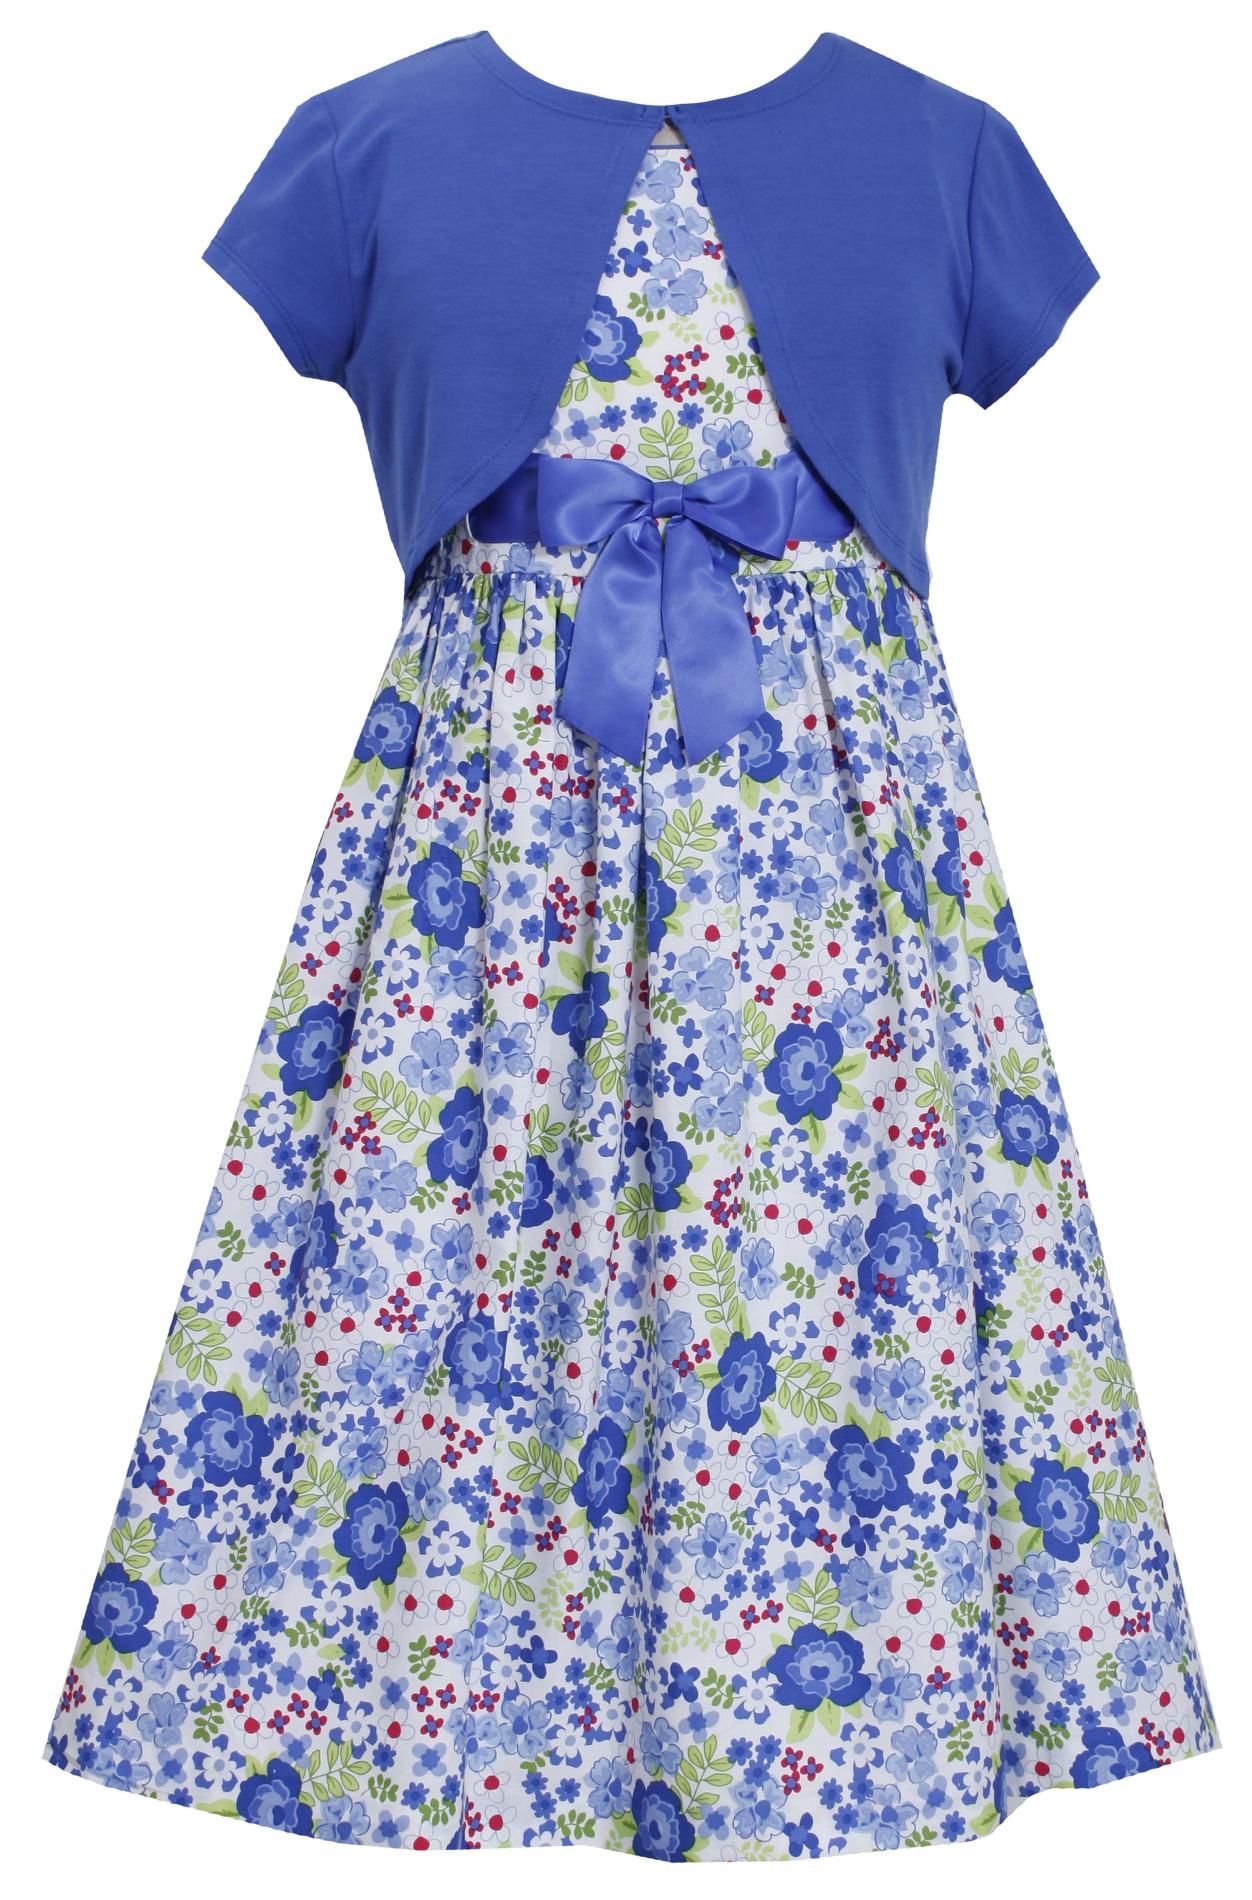 Ashley Ann Girl's Dress & Short-Sleeve Shrug - Floral